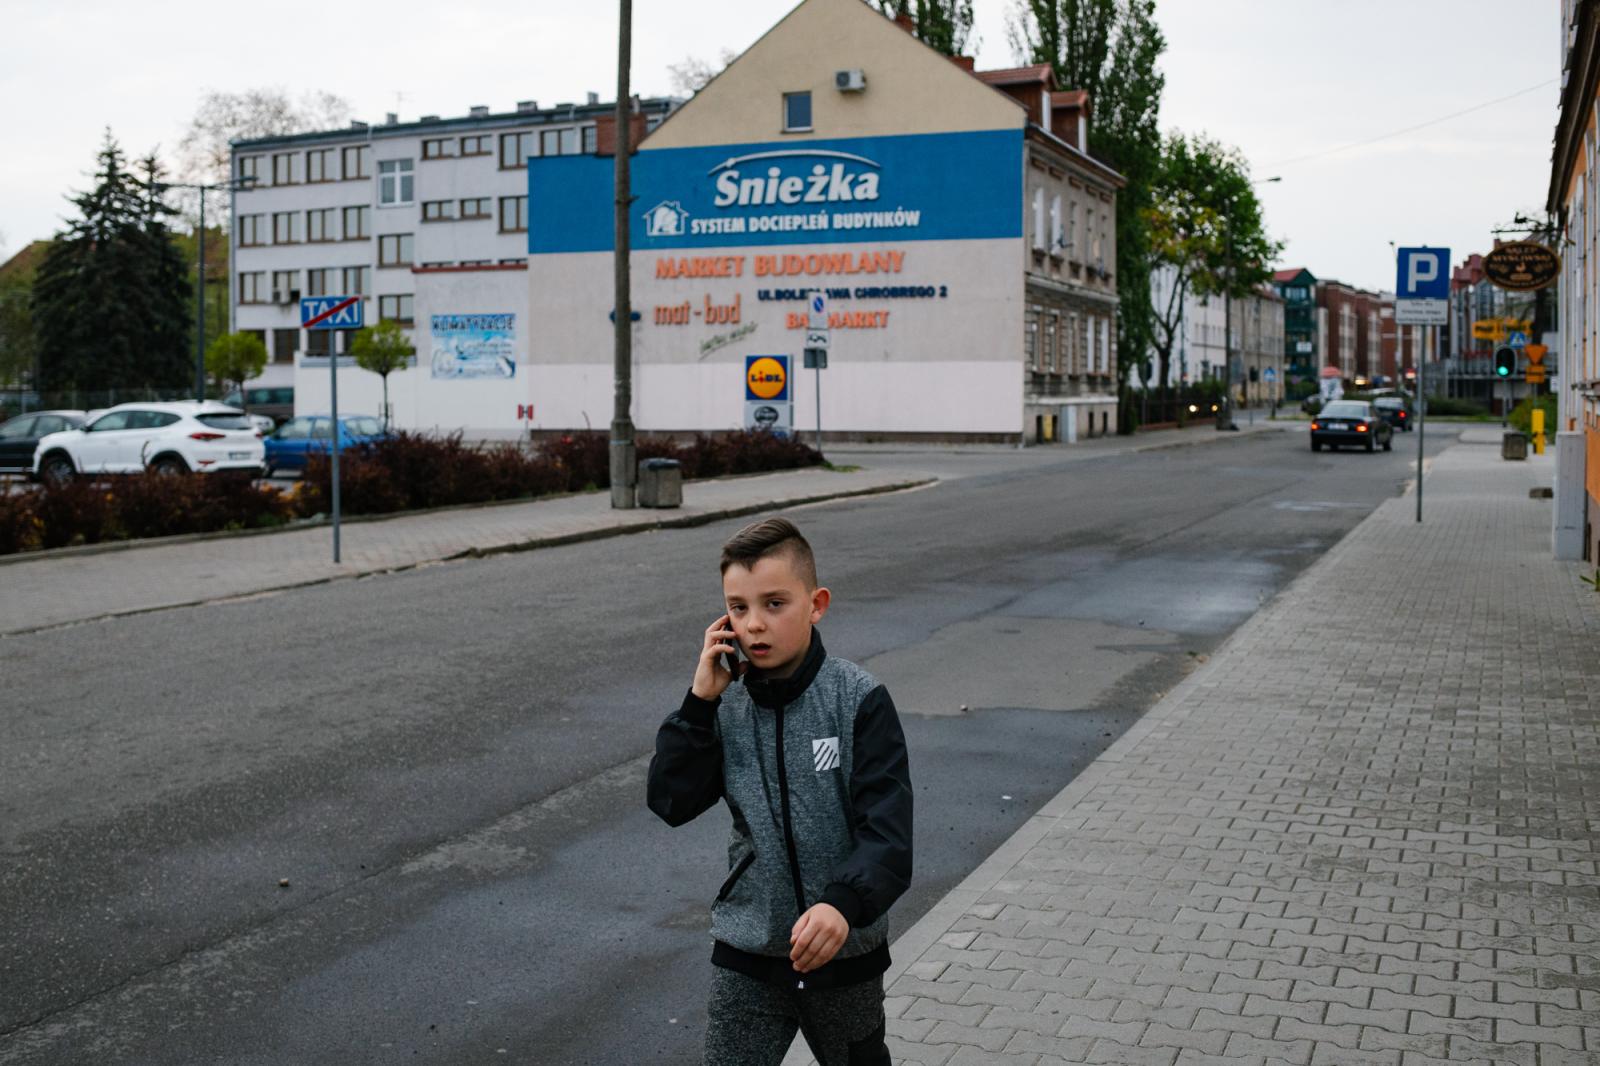  A child walks along a street in Słubice 